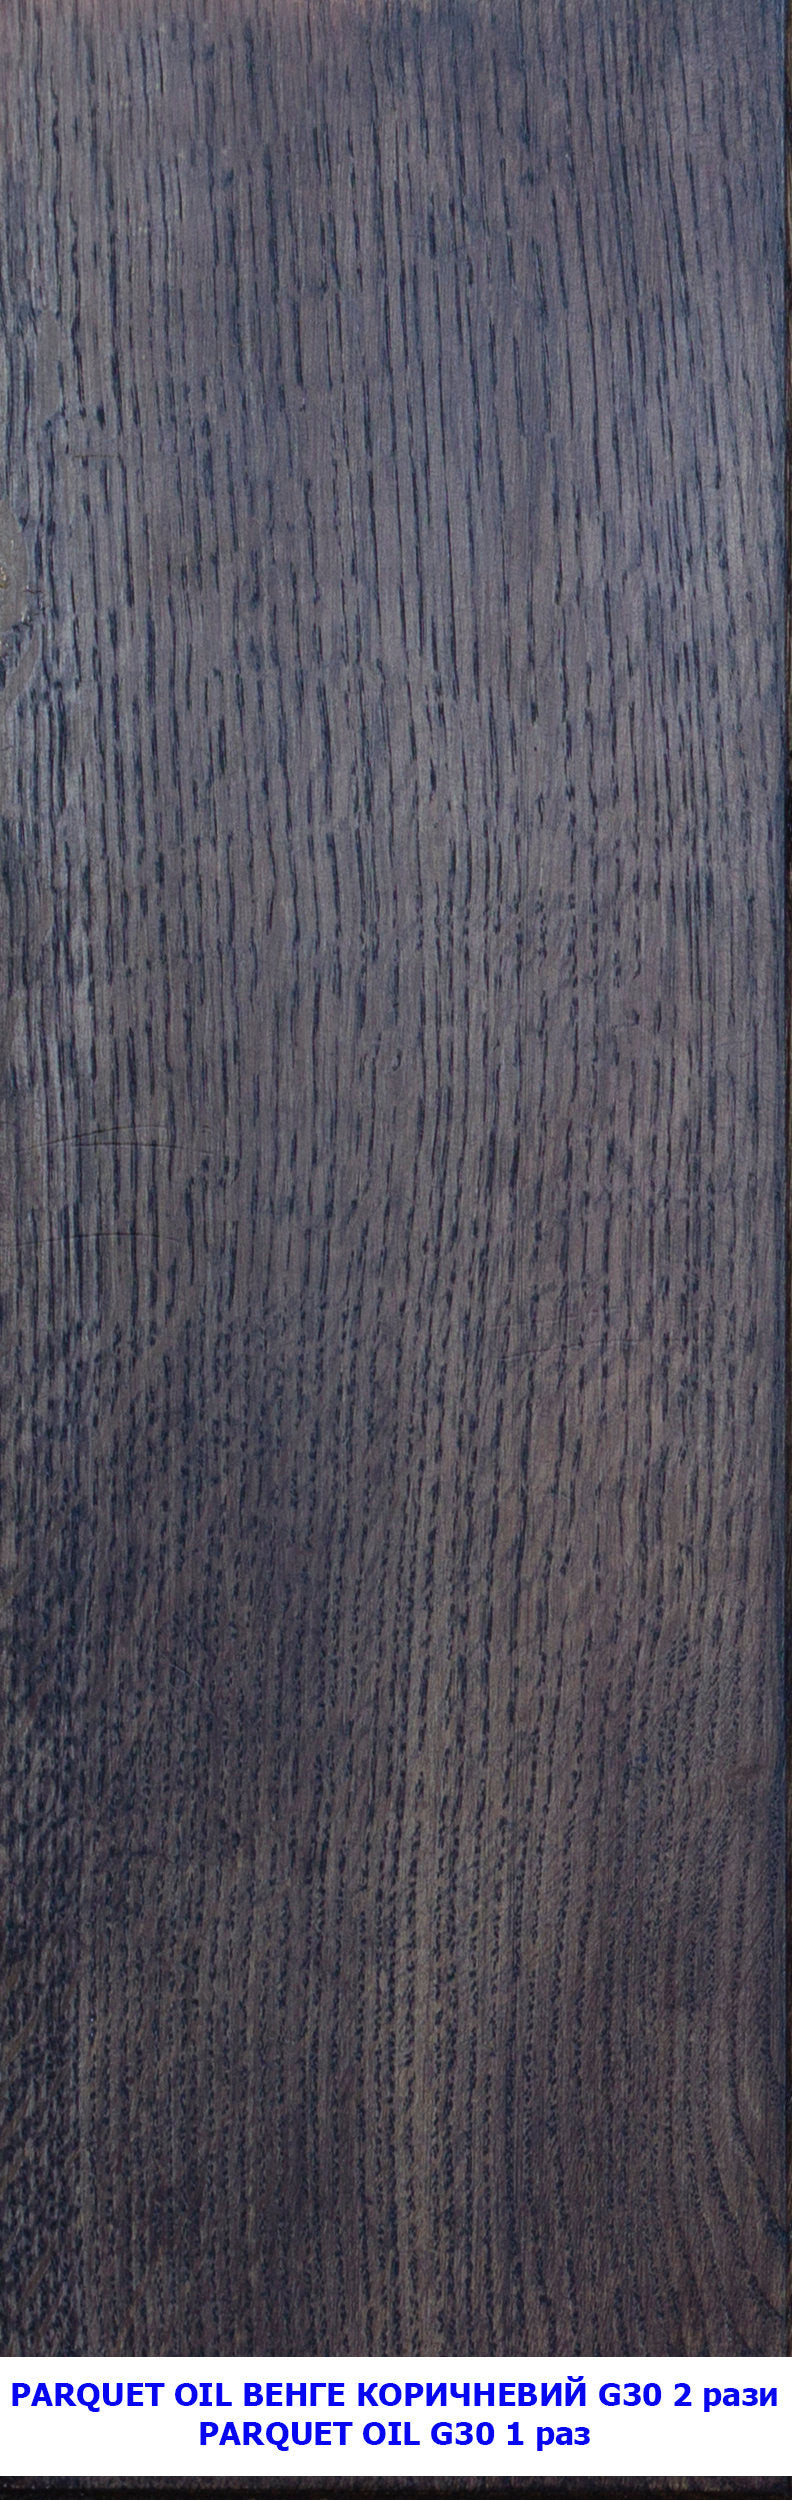 Wall-mounted organizer. plywood oak.dark venge